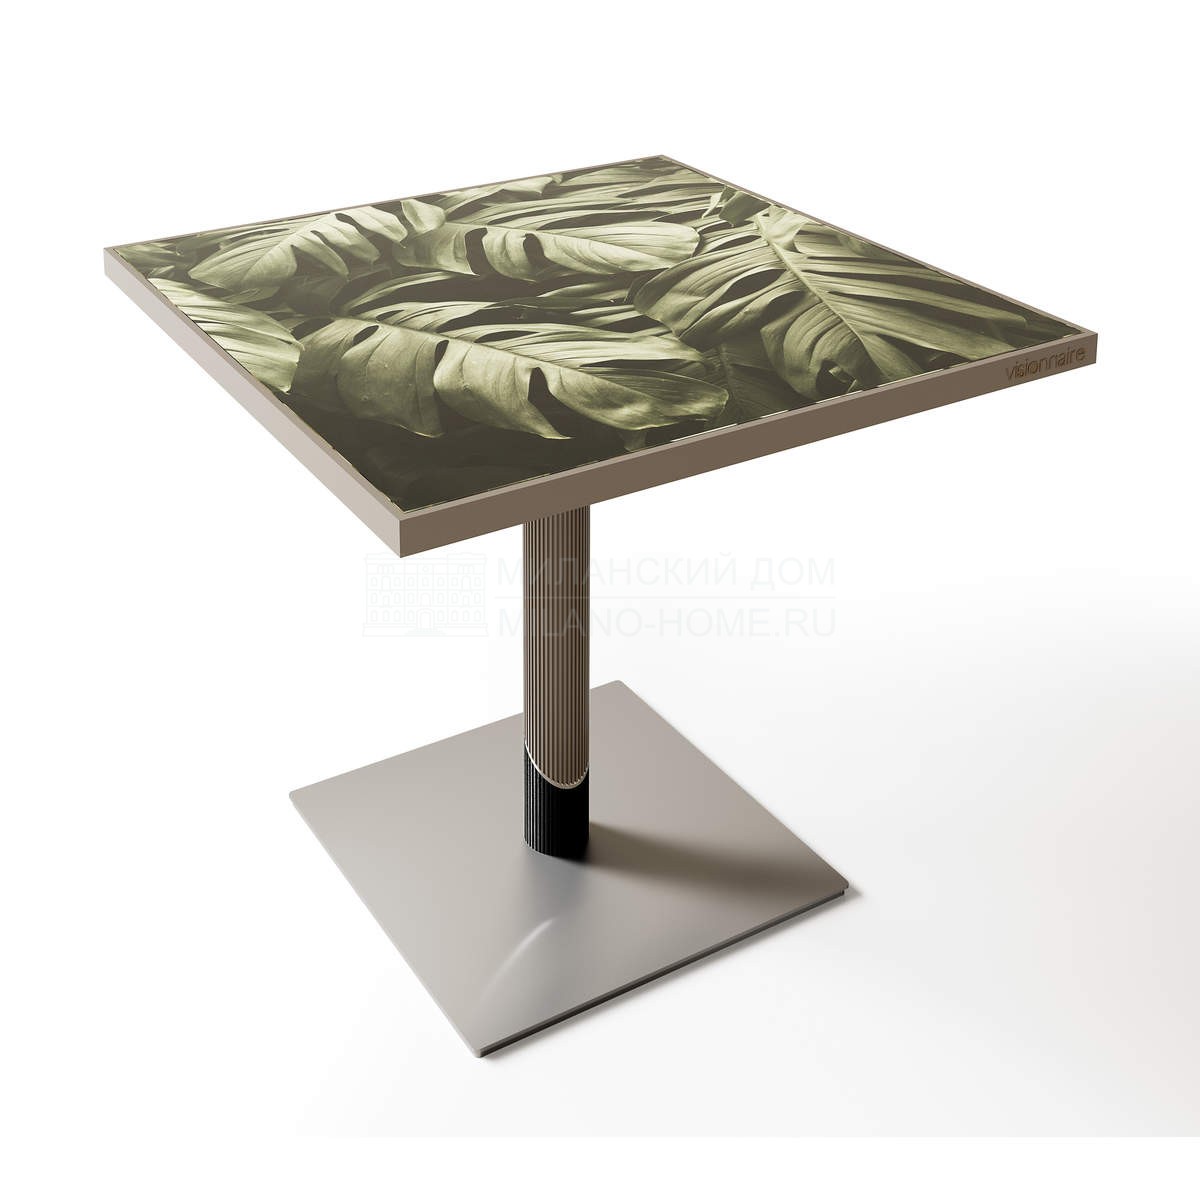 Обеденный стол Dylan dining table из Италии фабрики IPE CAVALLI VISIONNAIRE